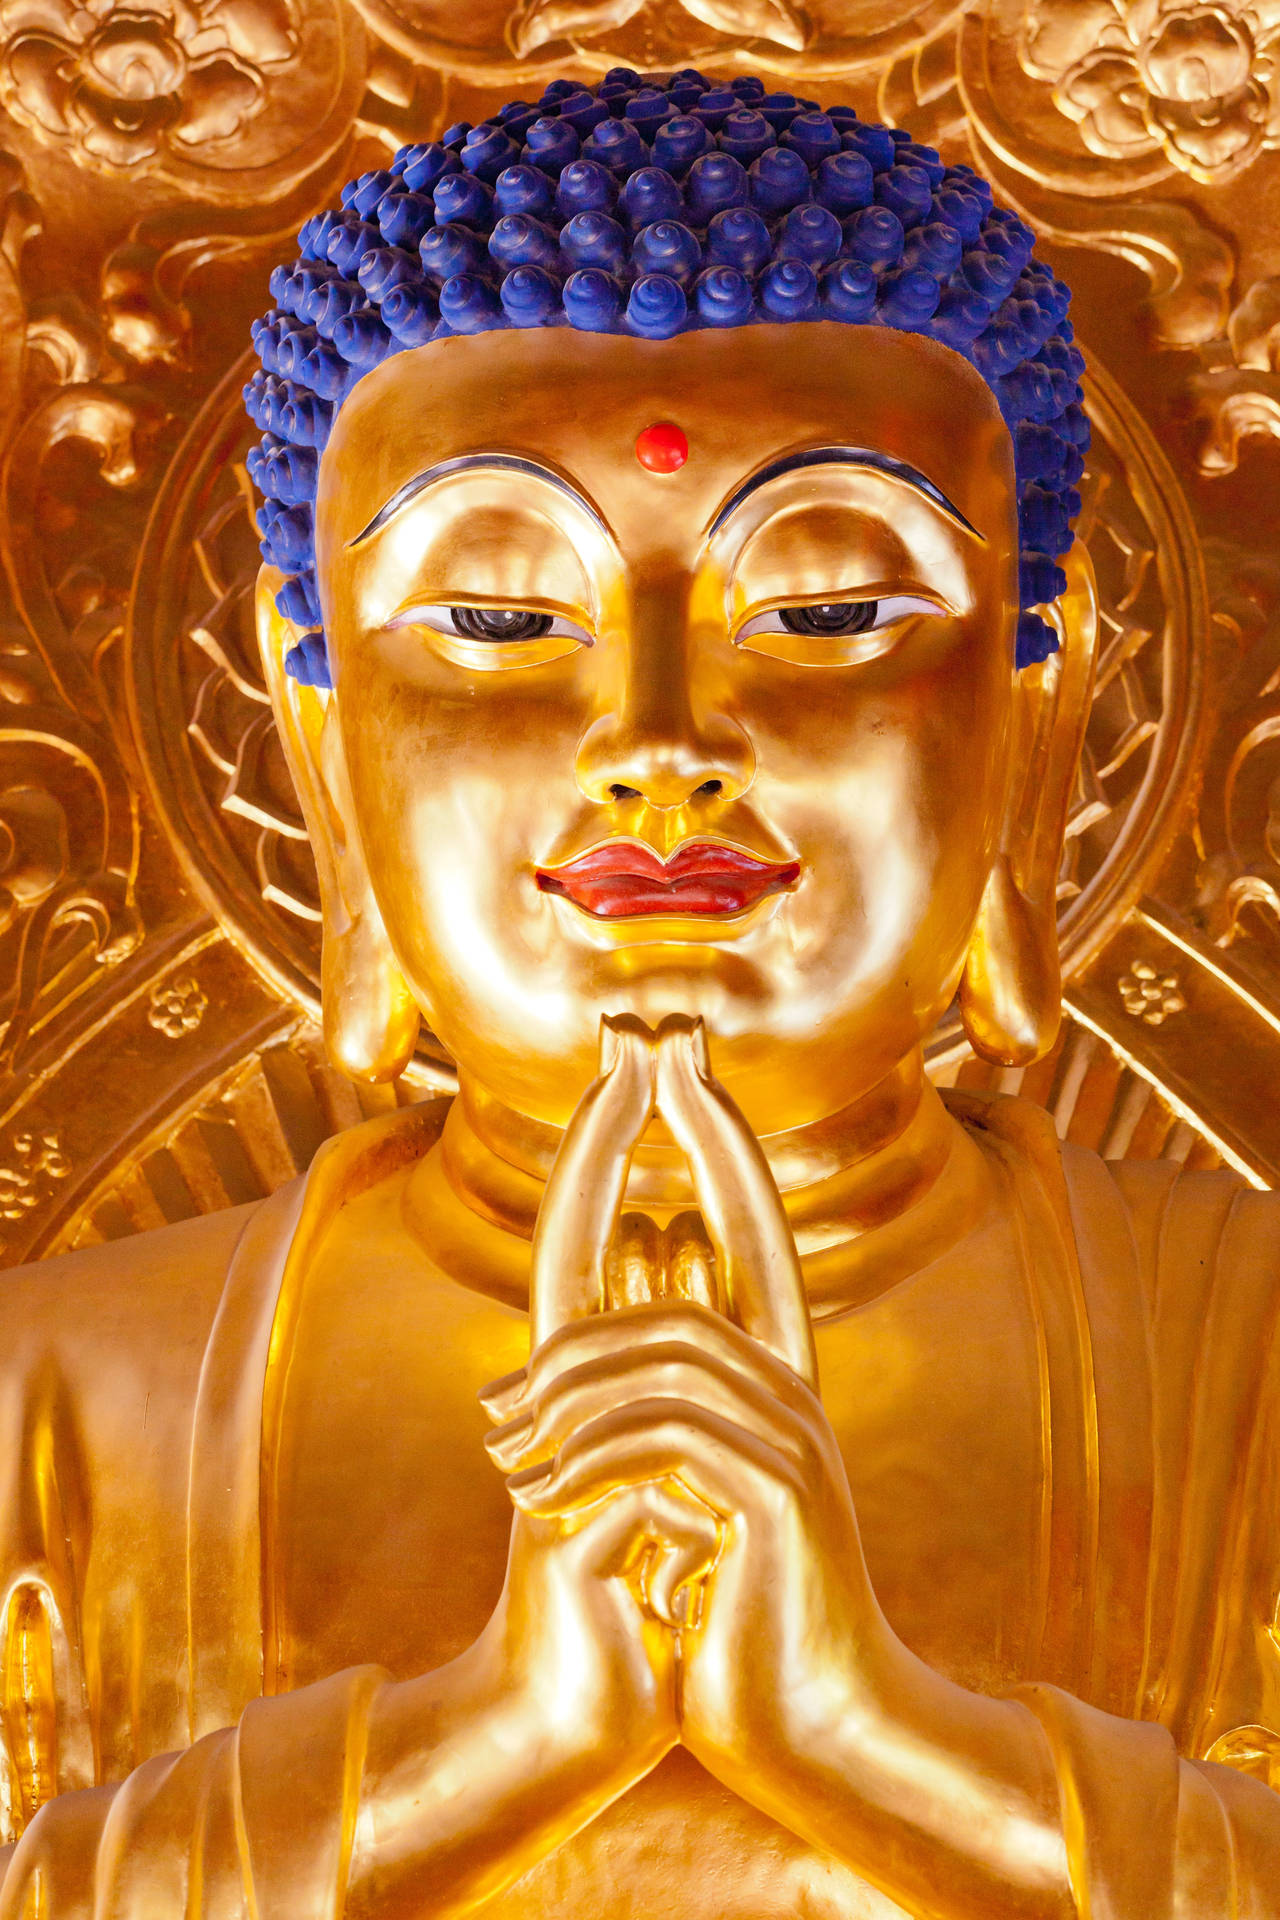 Buddha 3614X5421 Wallpaper and Background Image